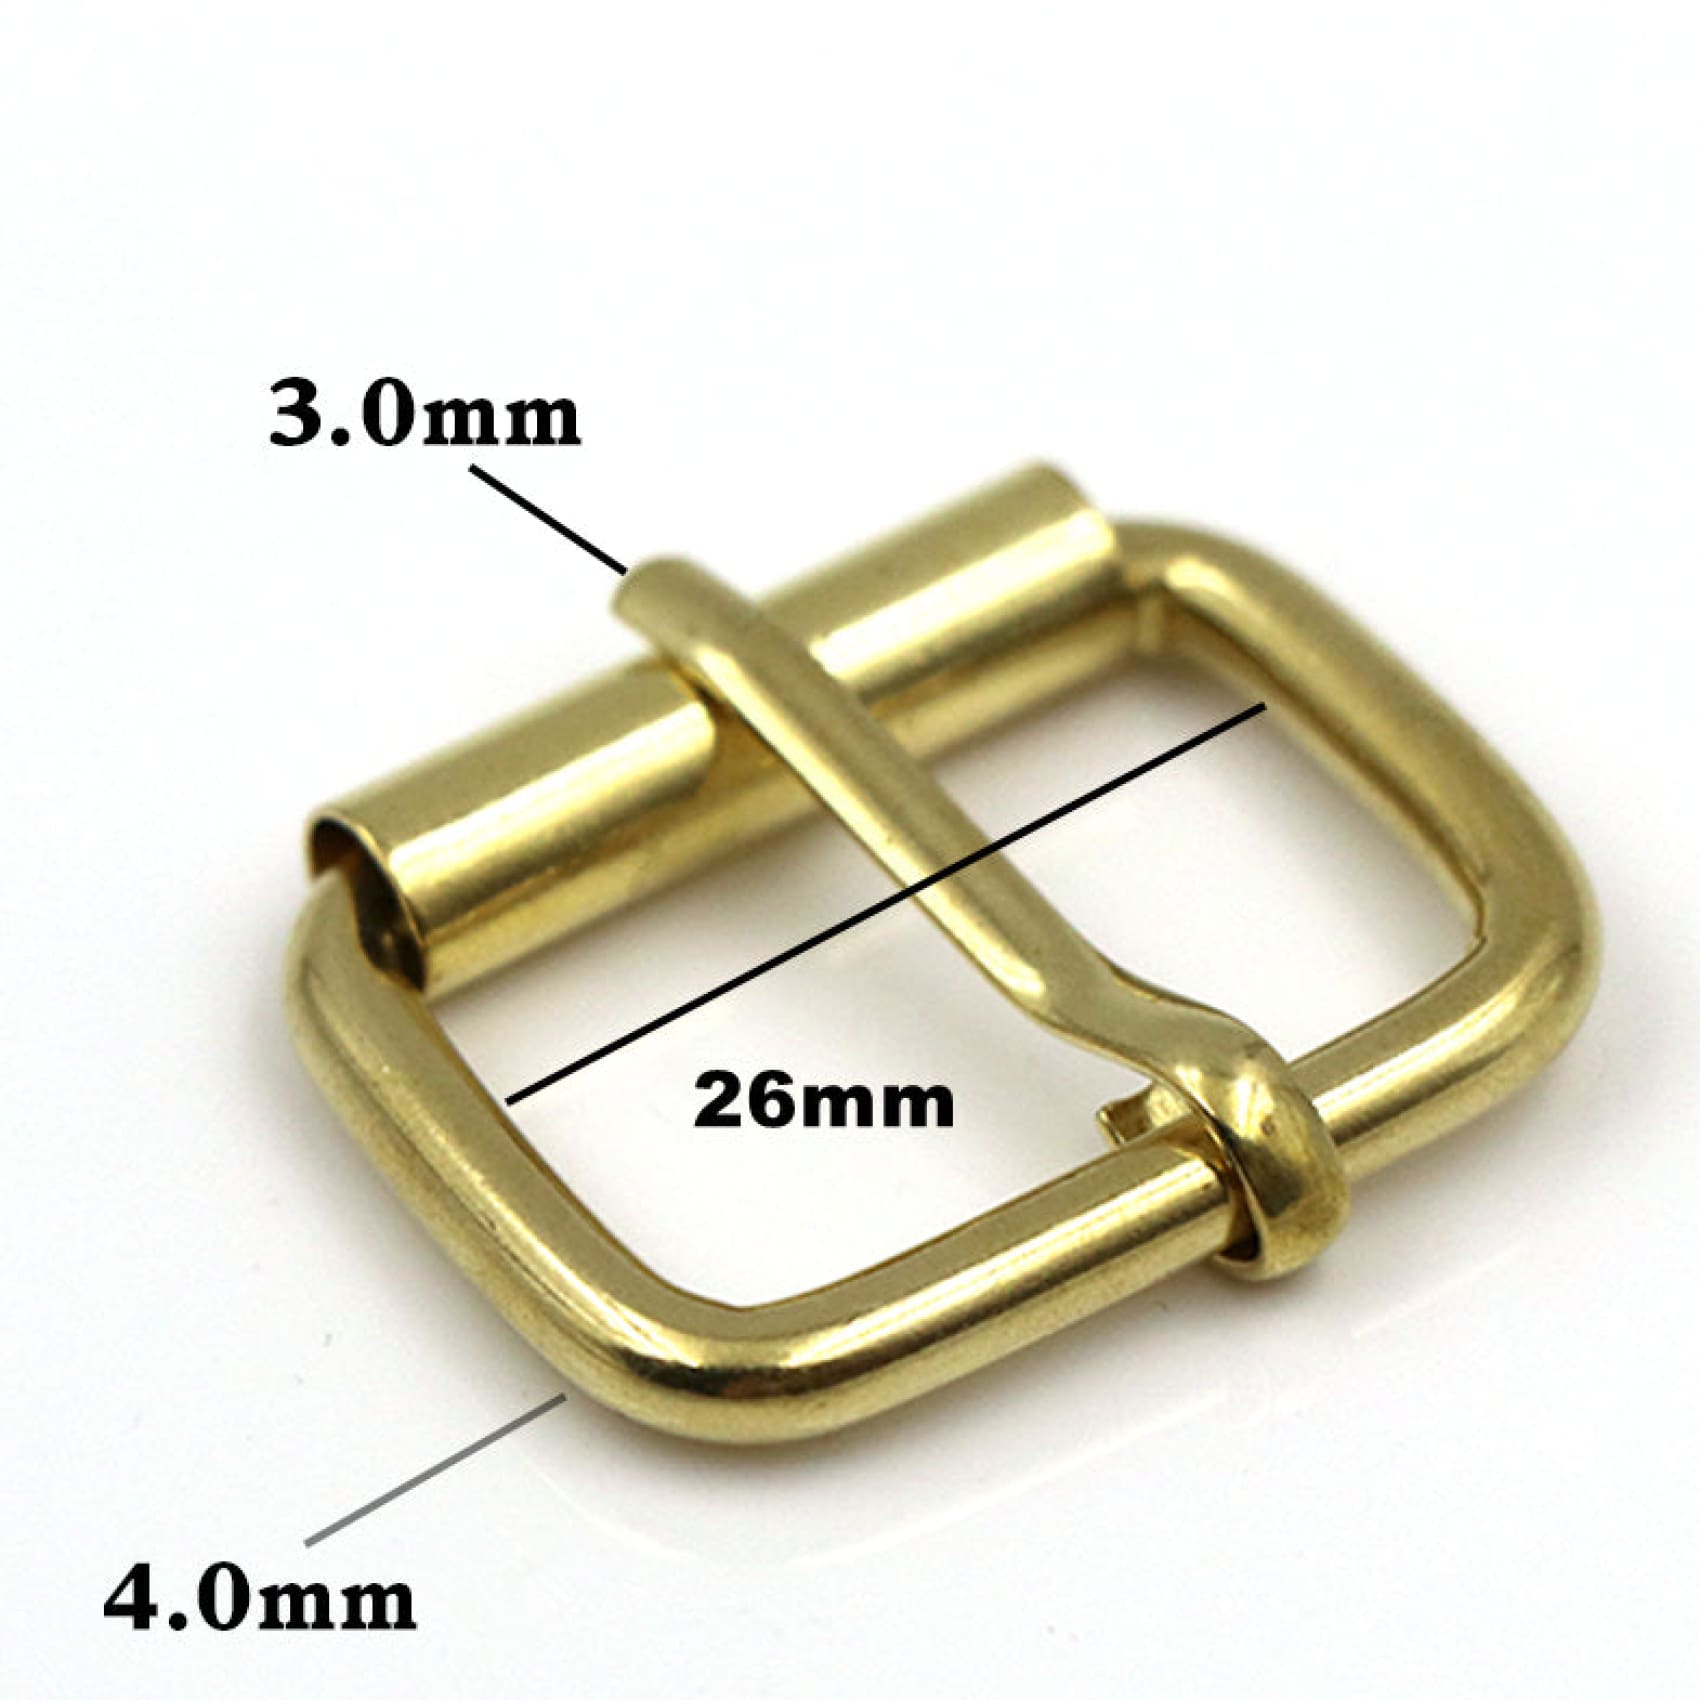 Solid Brass Roller Bar Buckle Leather Strap Fastener Buckle 26mm - 1pcs - Belt Buckles Brass